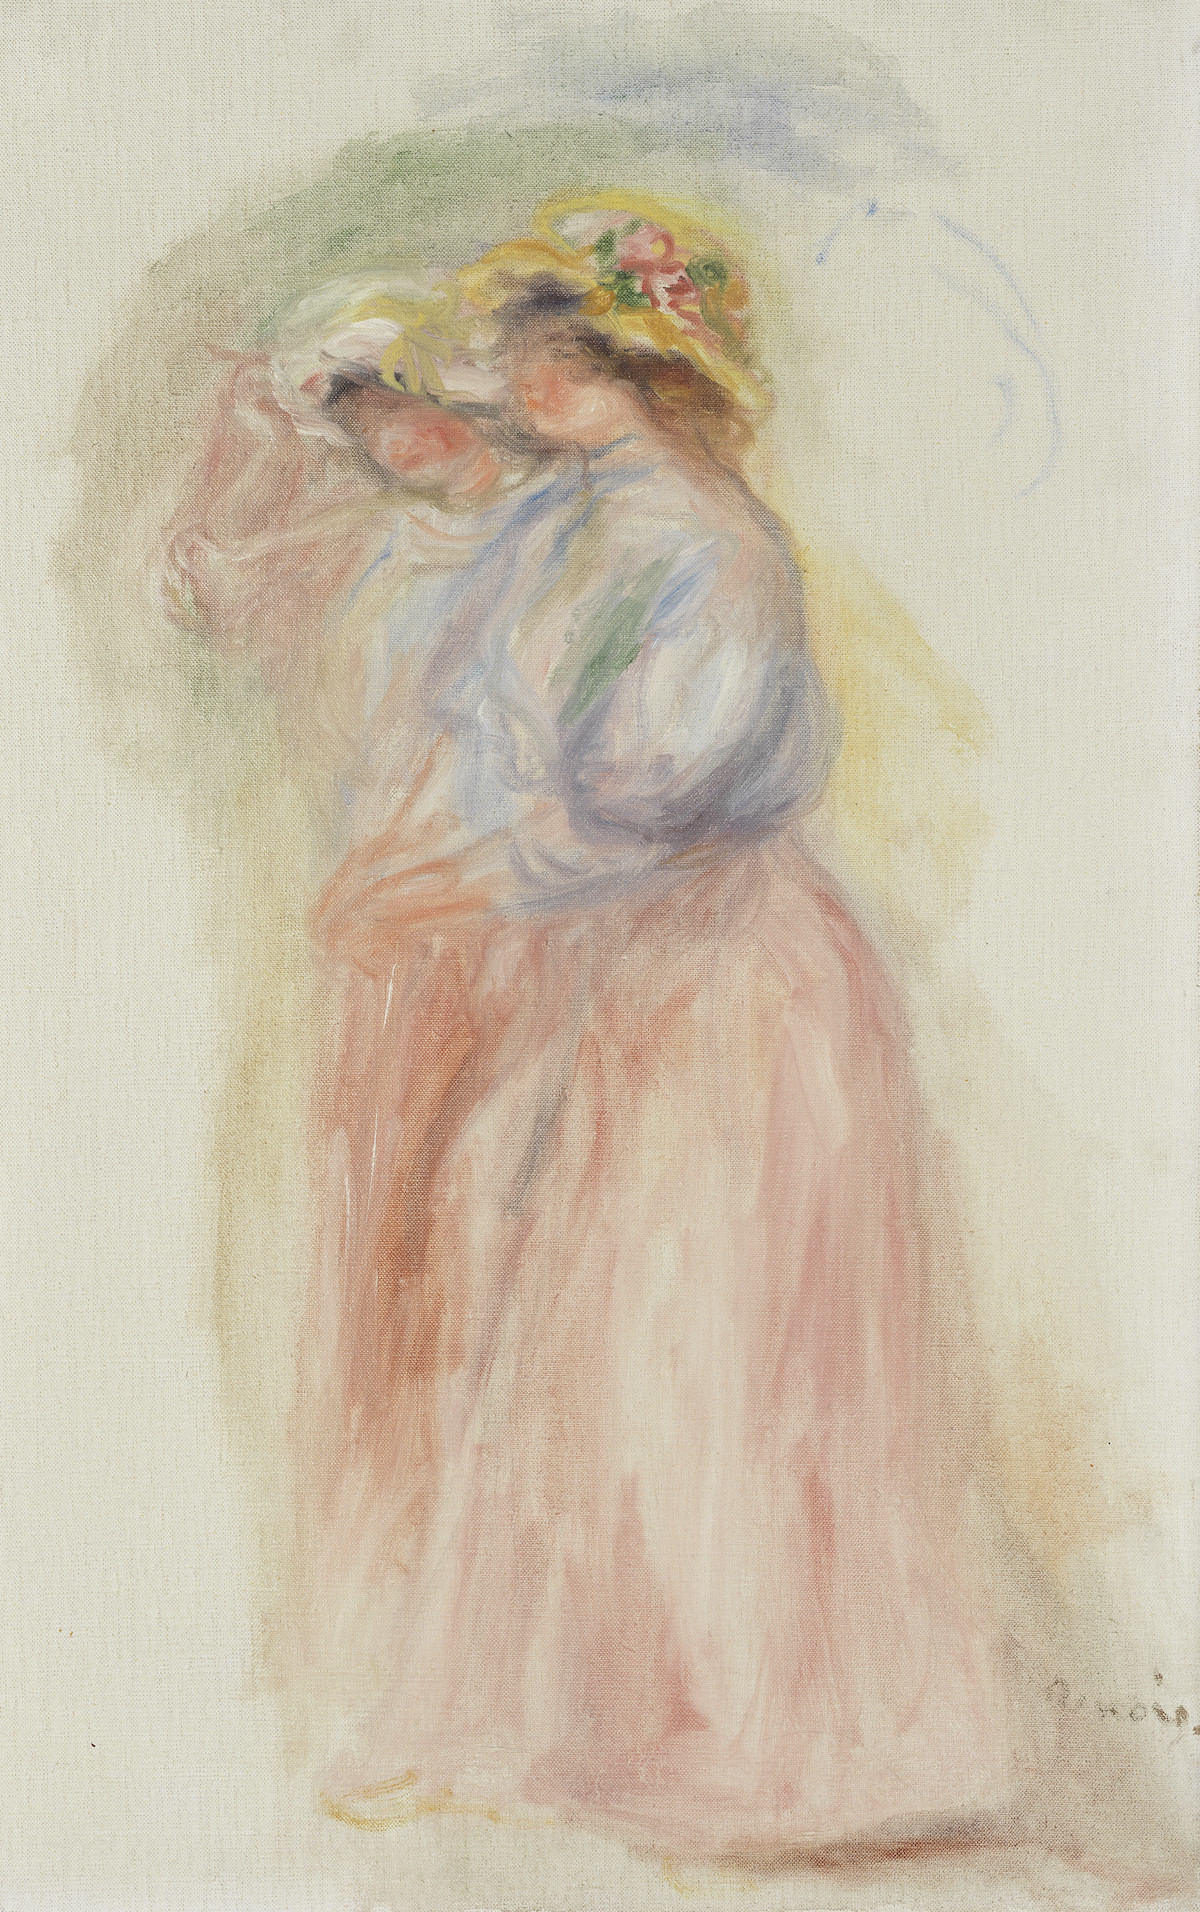 Pierre-Auguste Renoir, oil on canvas painting, Deux femmes en promenade, 1906.